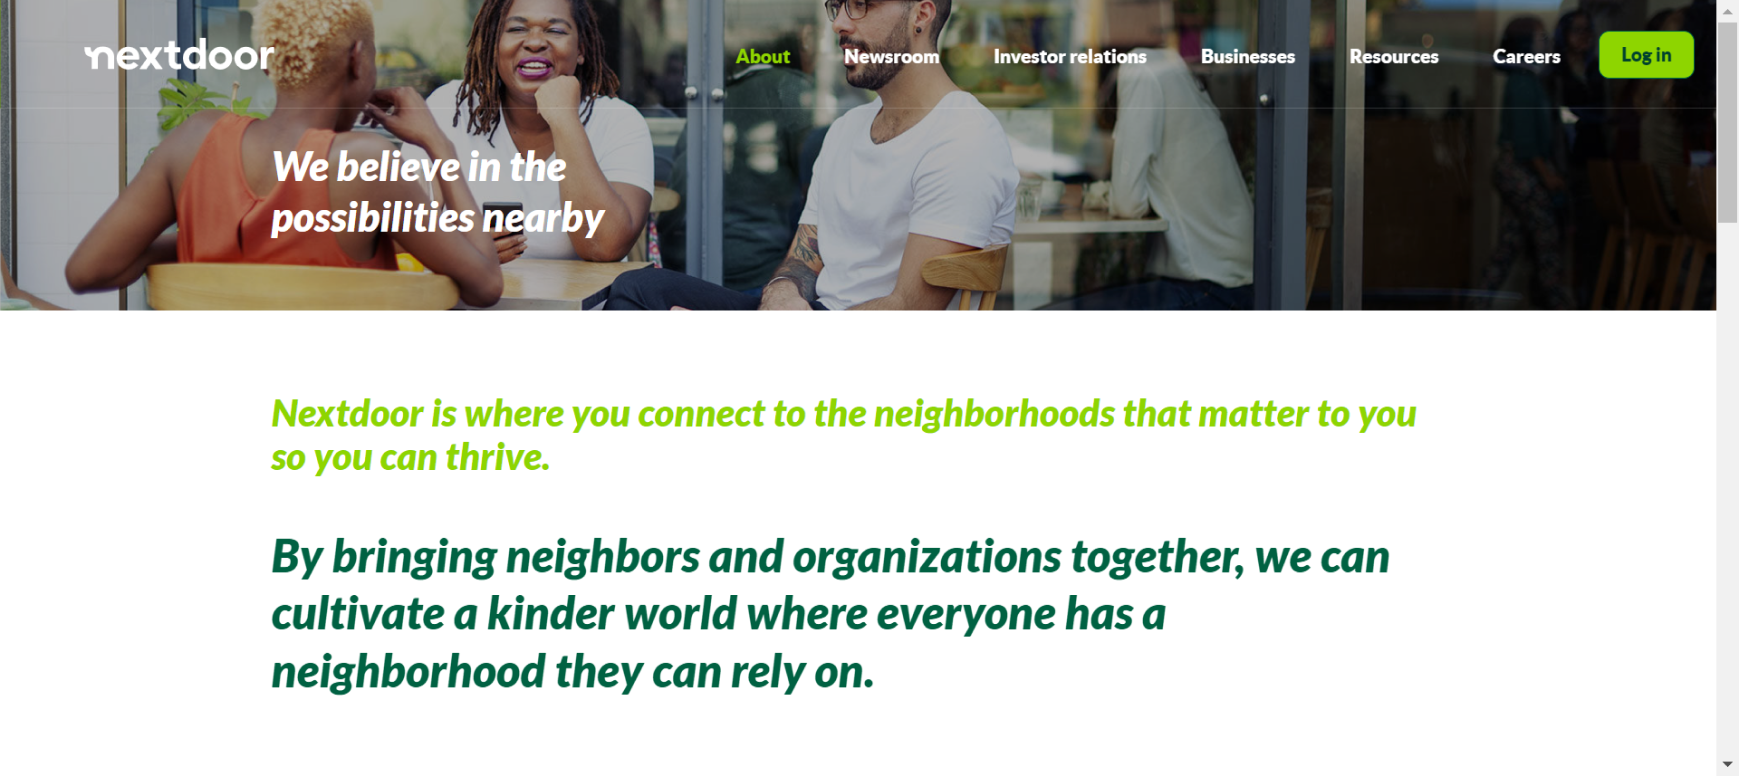 Web app idea #21 Neighborhood Community Platform